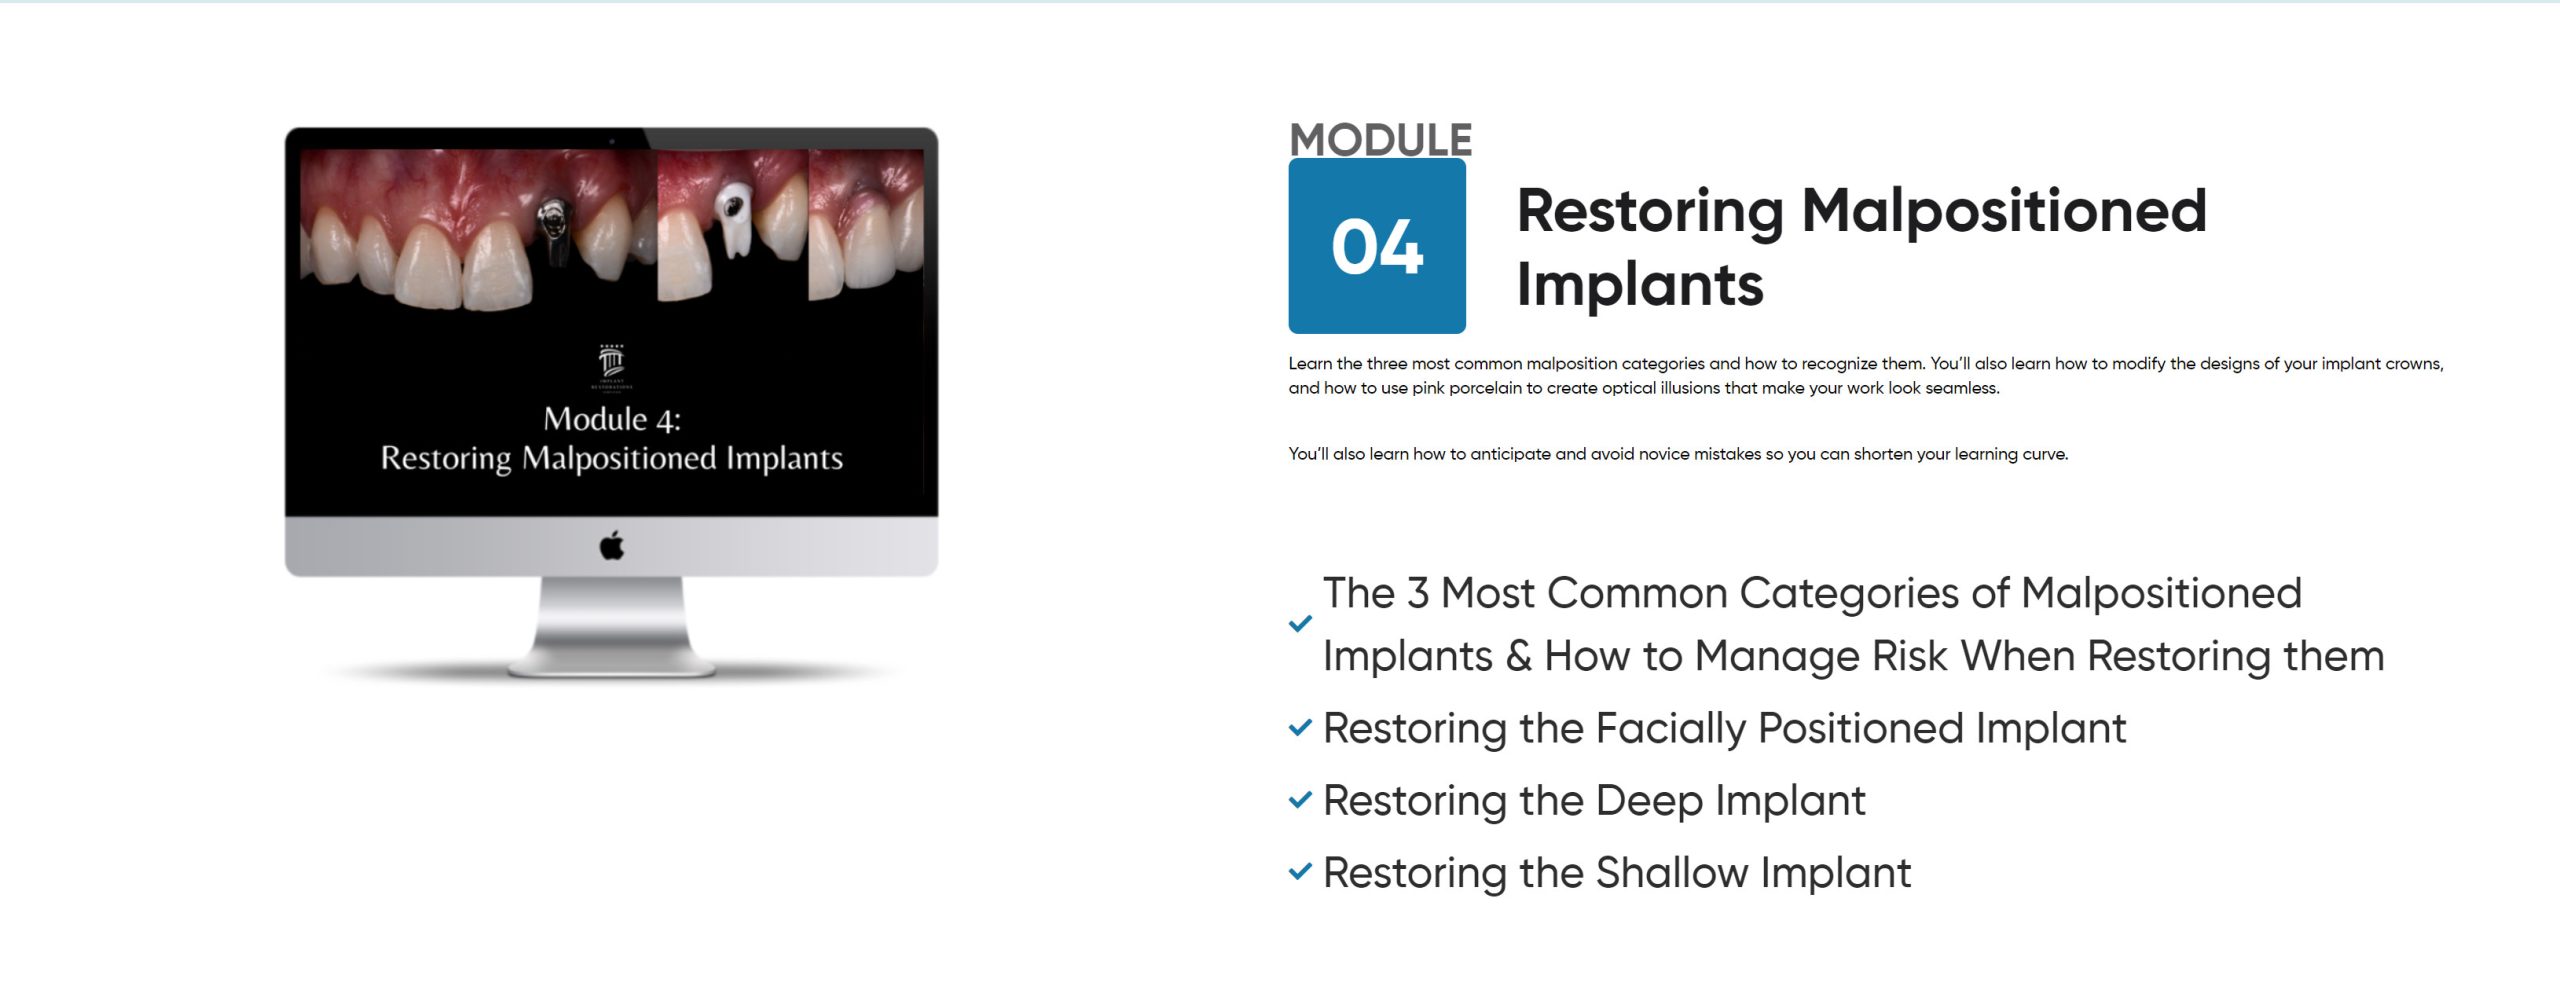 Restoring Malpositioned Implants